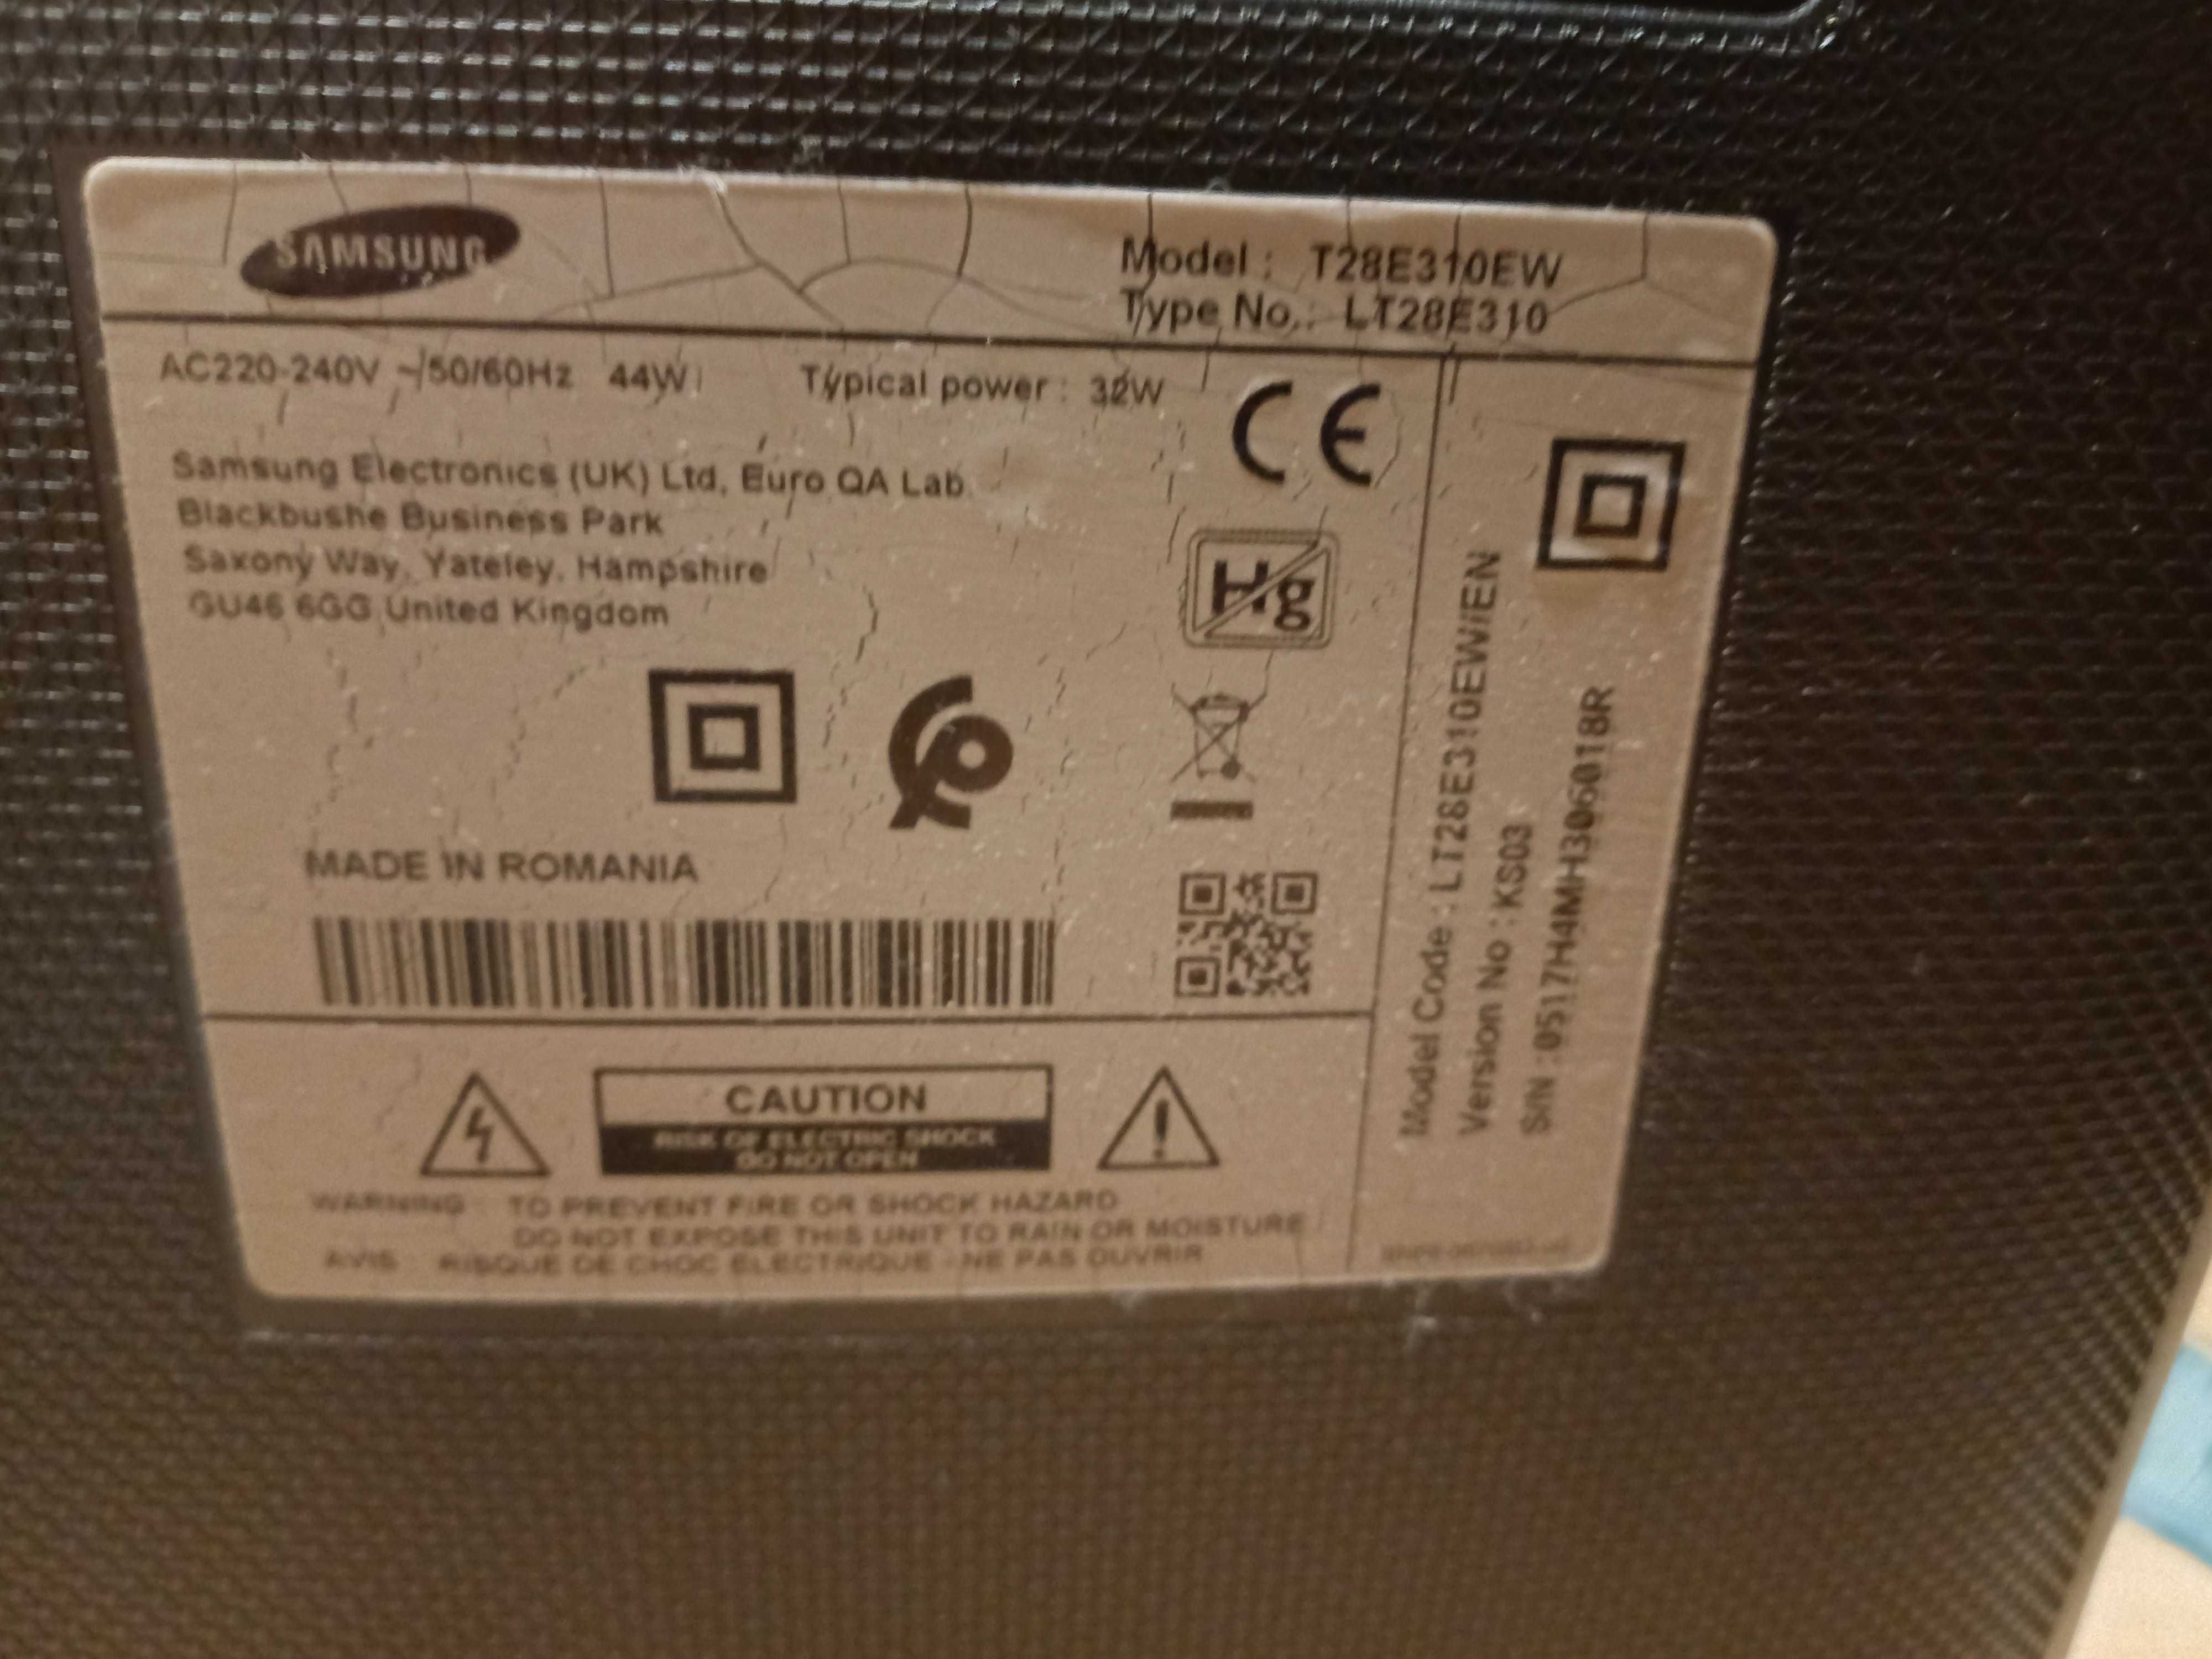 Телевизор Samsung LED, 28" [68 cм]HD